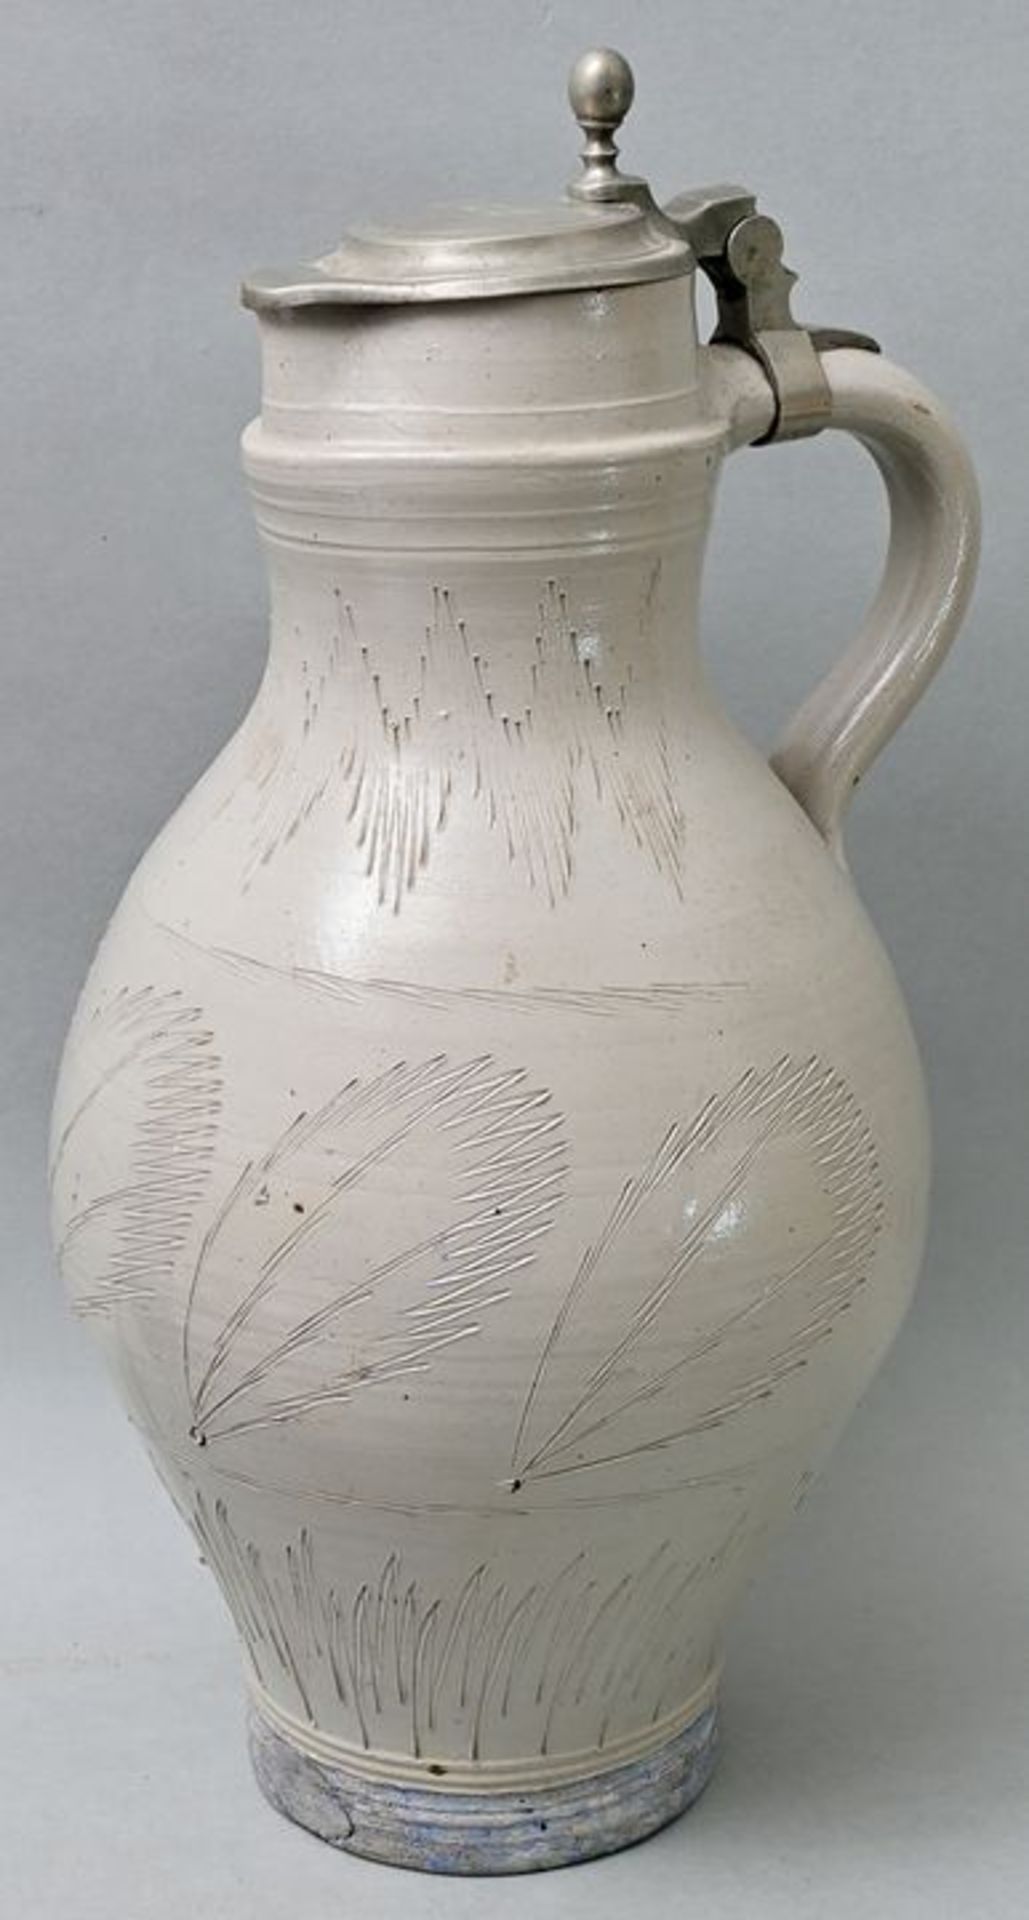 Westerwälder Keramikkanne / ceramic jug